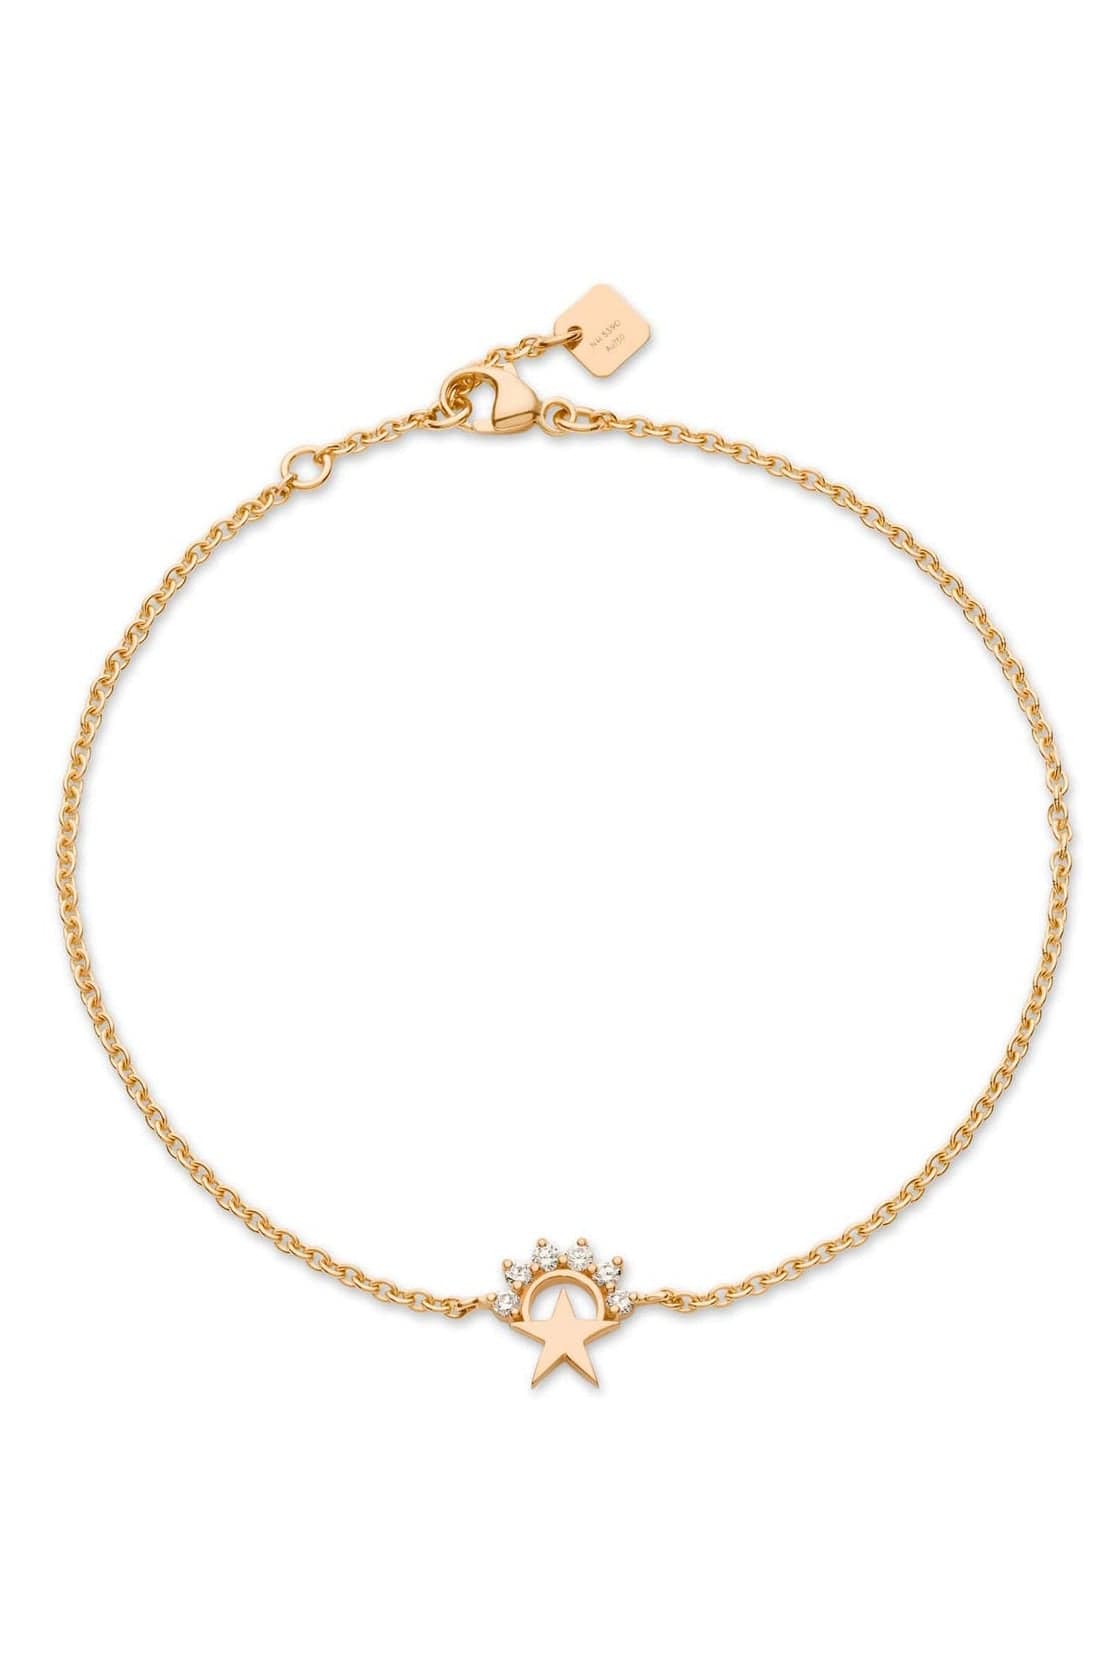 NOUVEL HERITAGE-Small Mystic Star Bracelet-ROSE GOLD